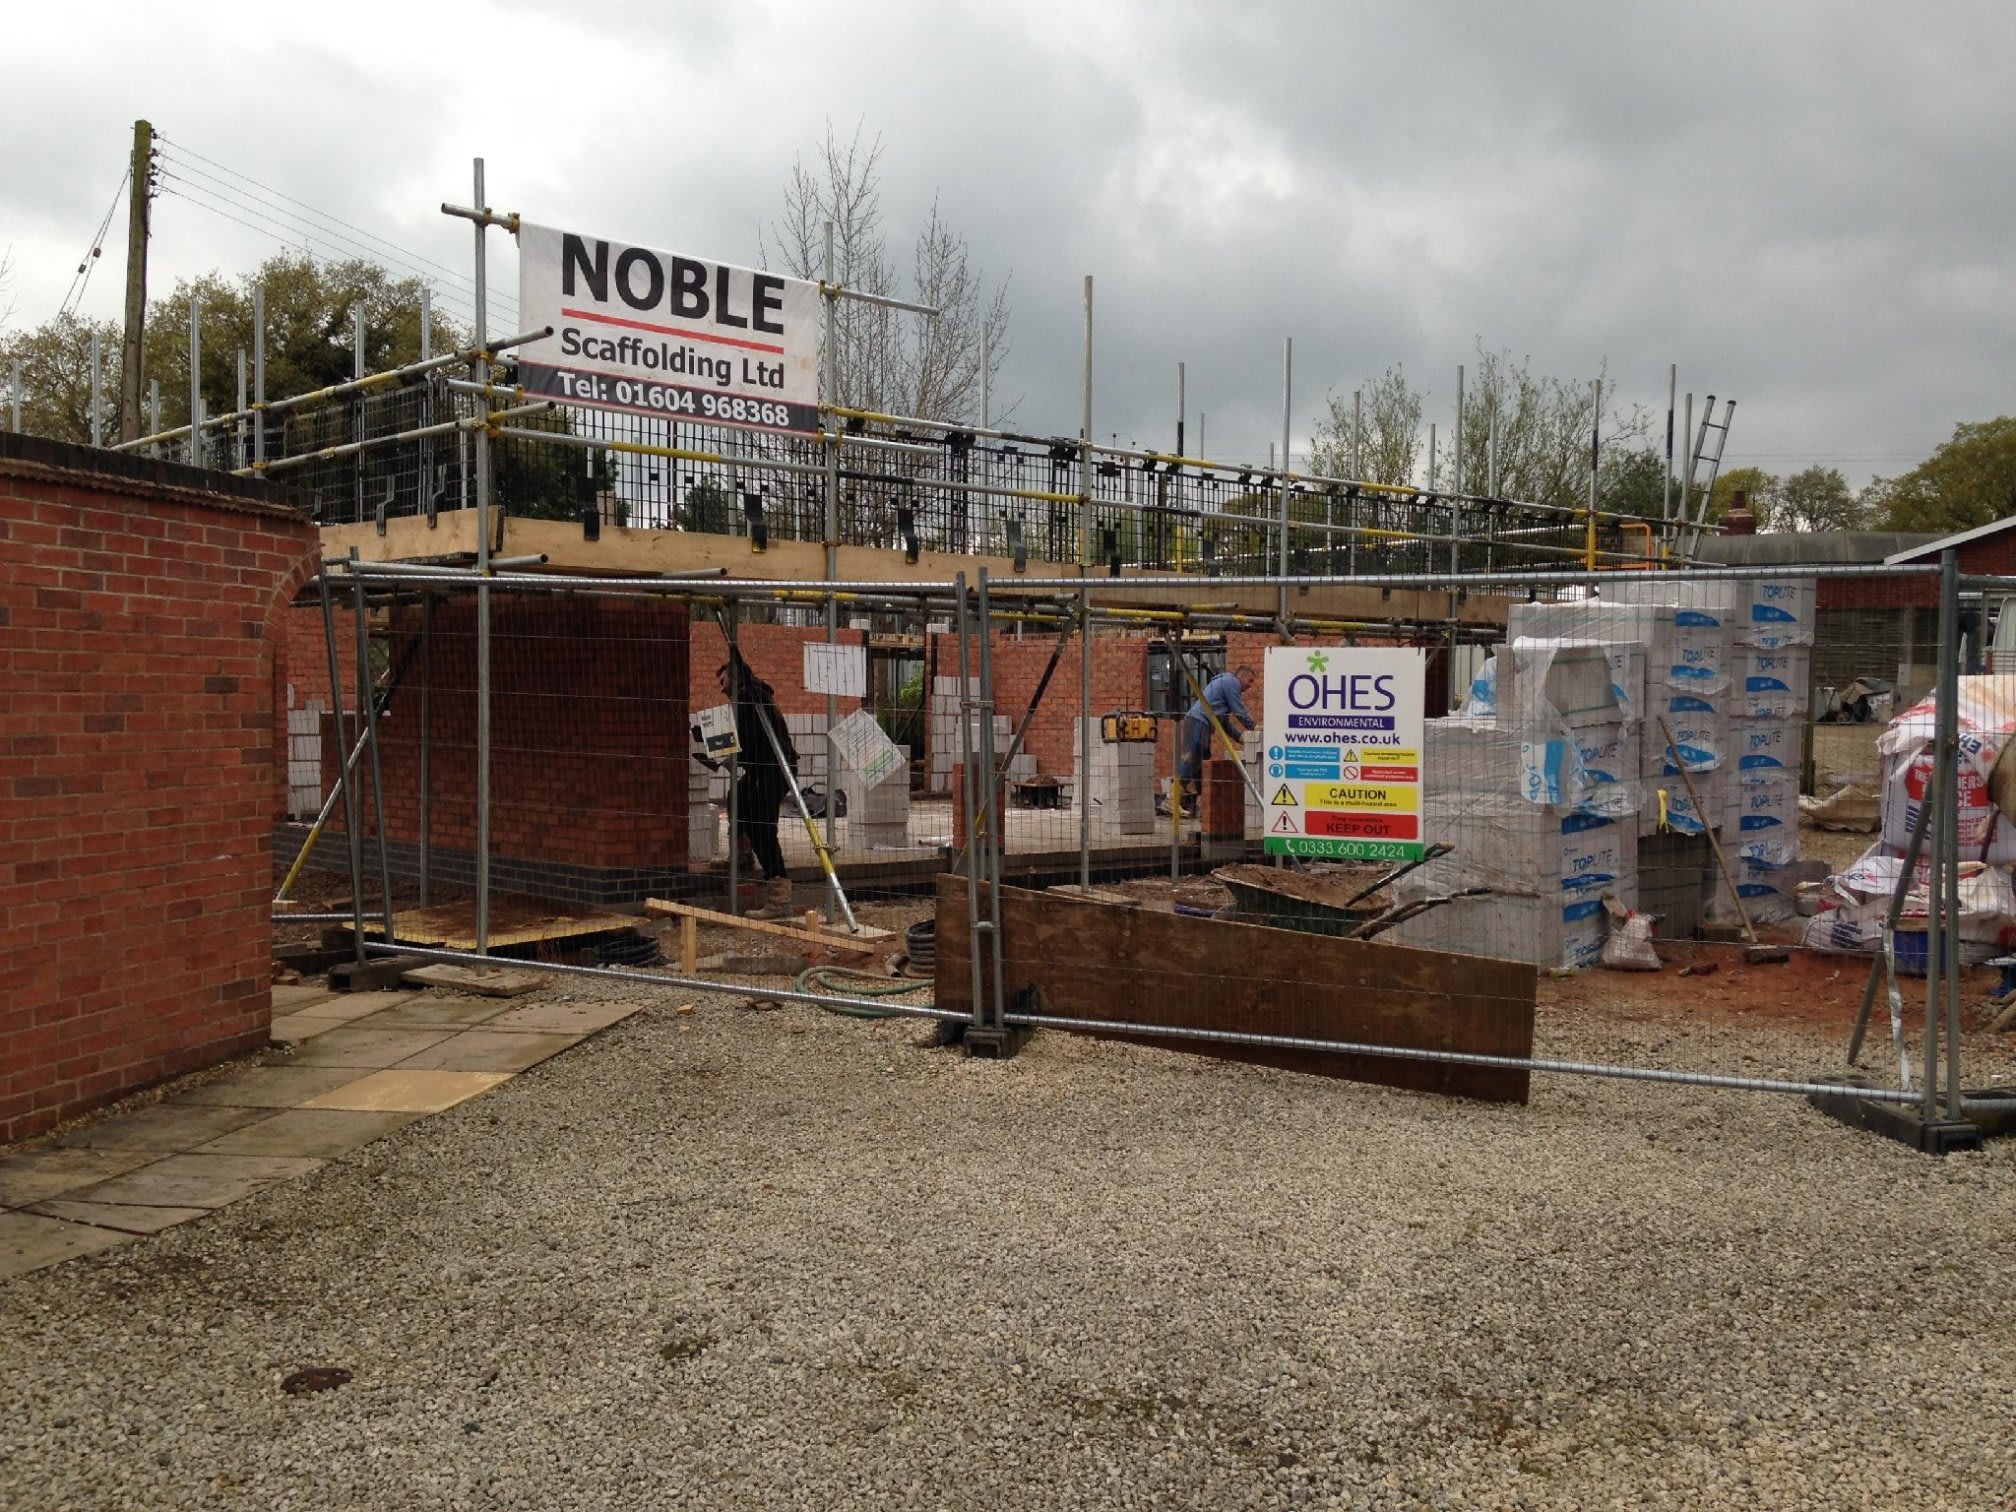 NOBLE Scaffolding Ltd Northampton 01604 968368